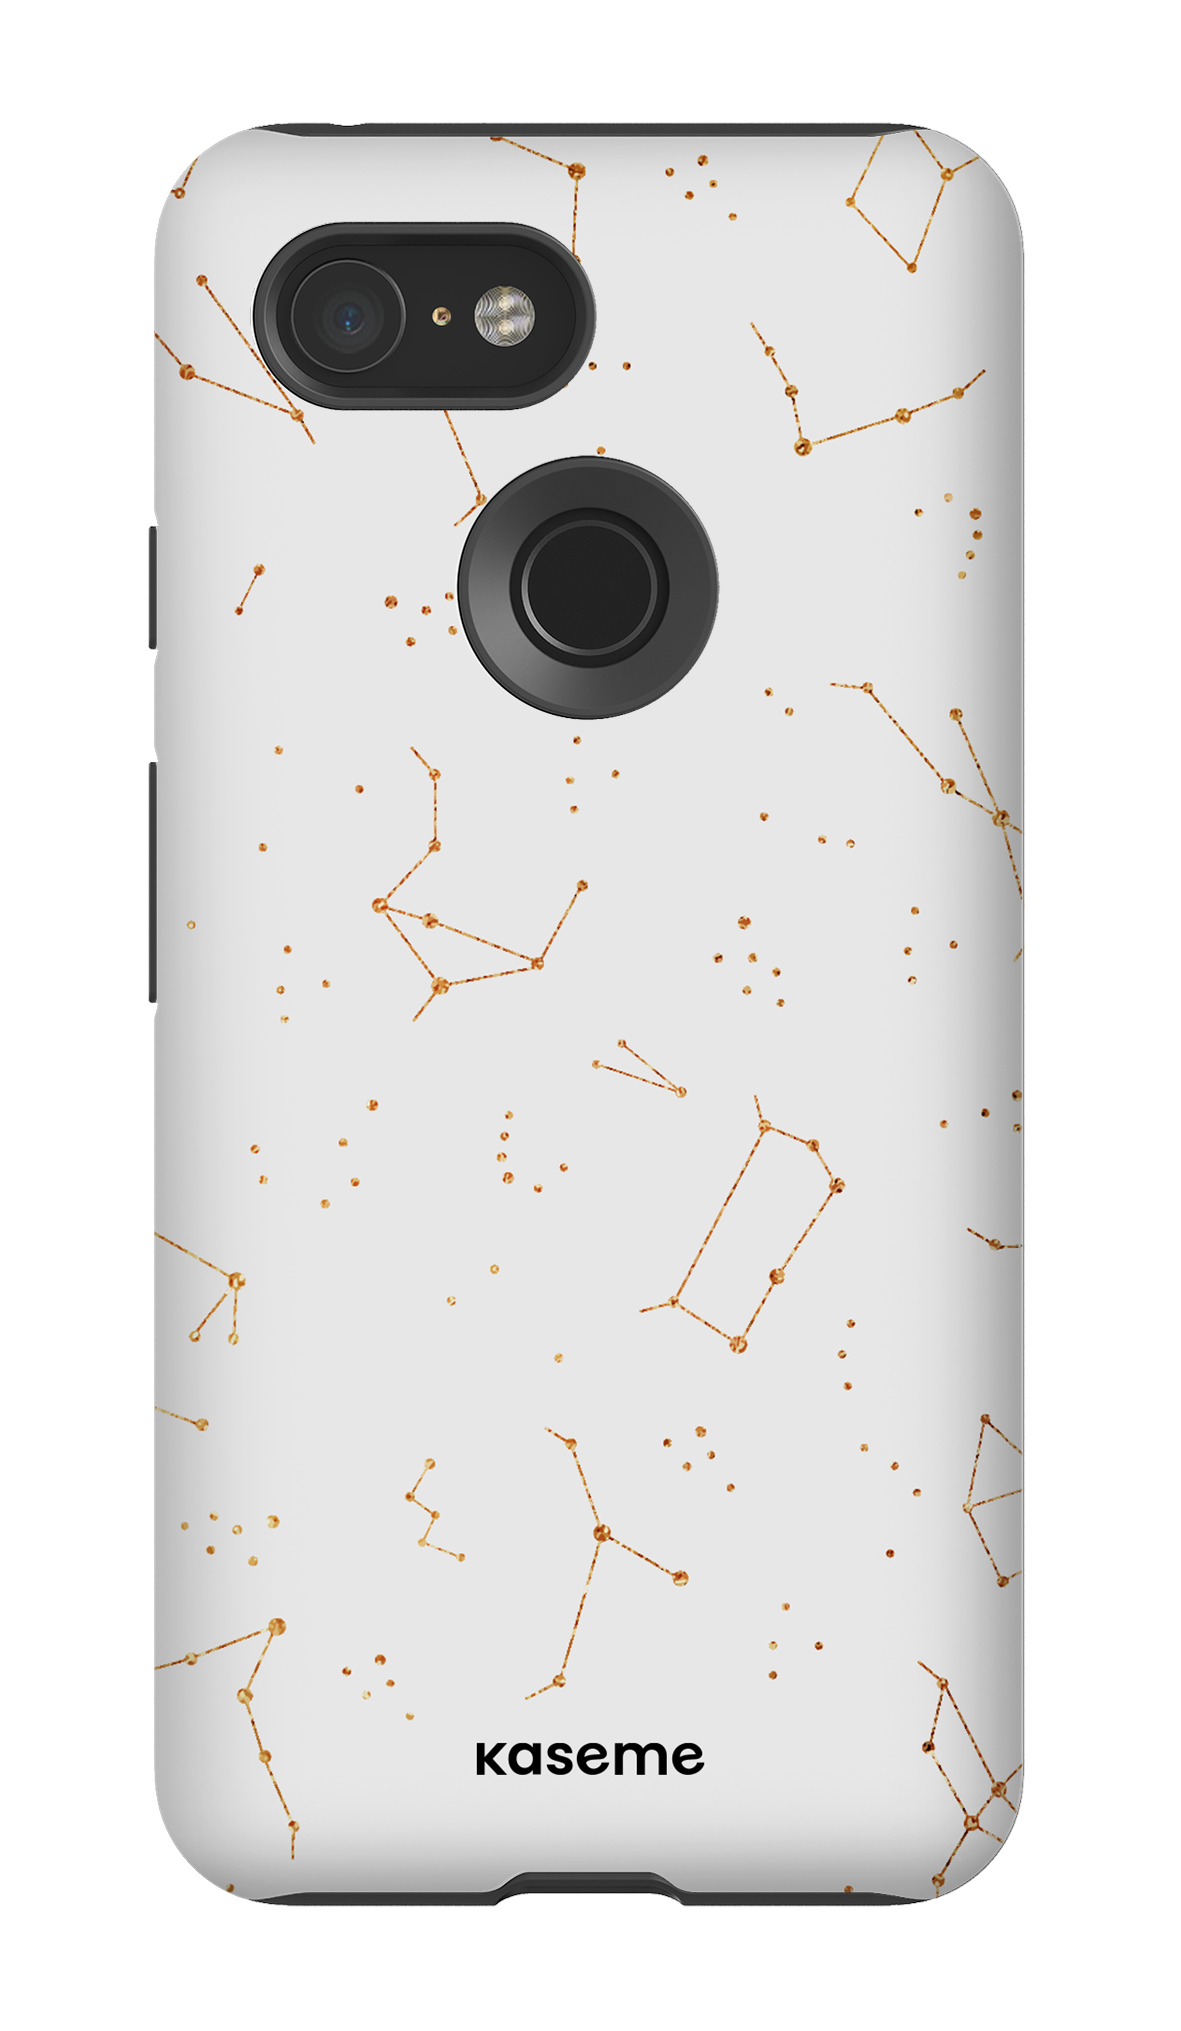 Stardust sky - Google Pixel 3